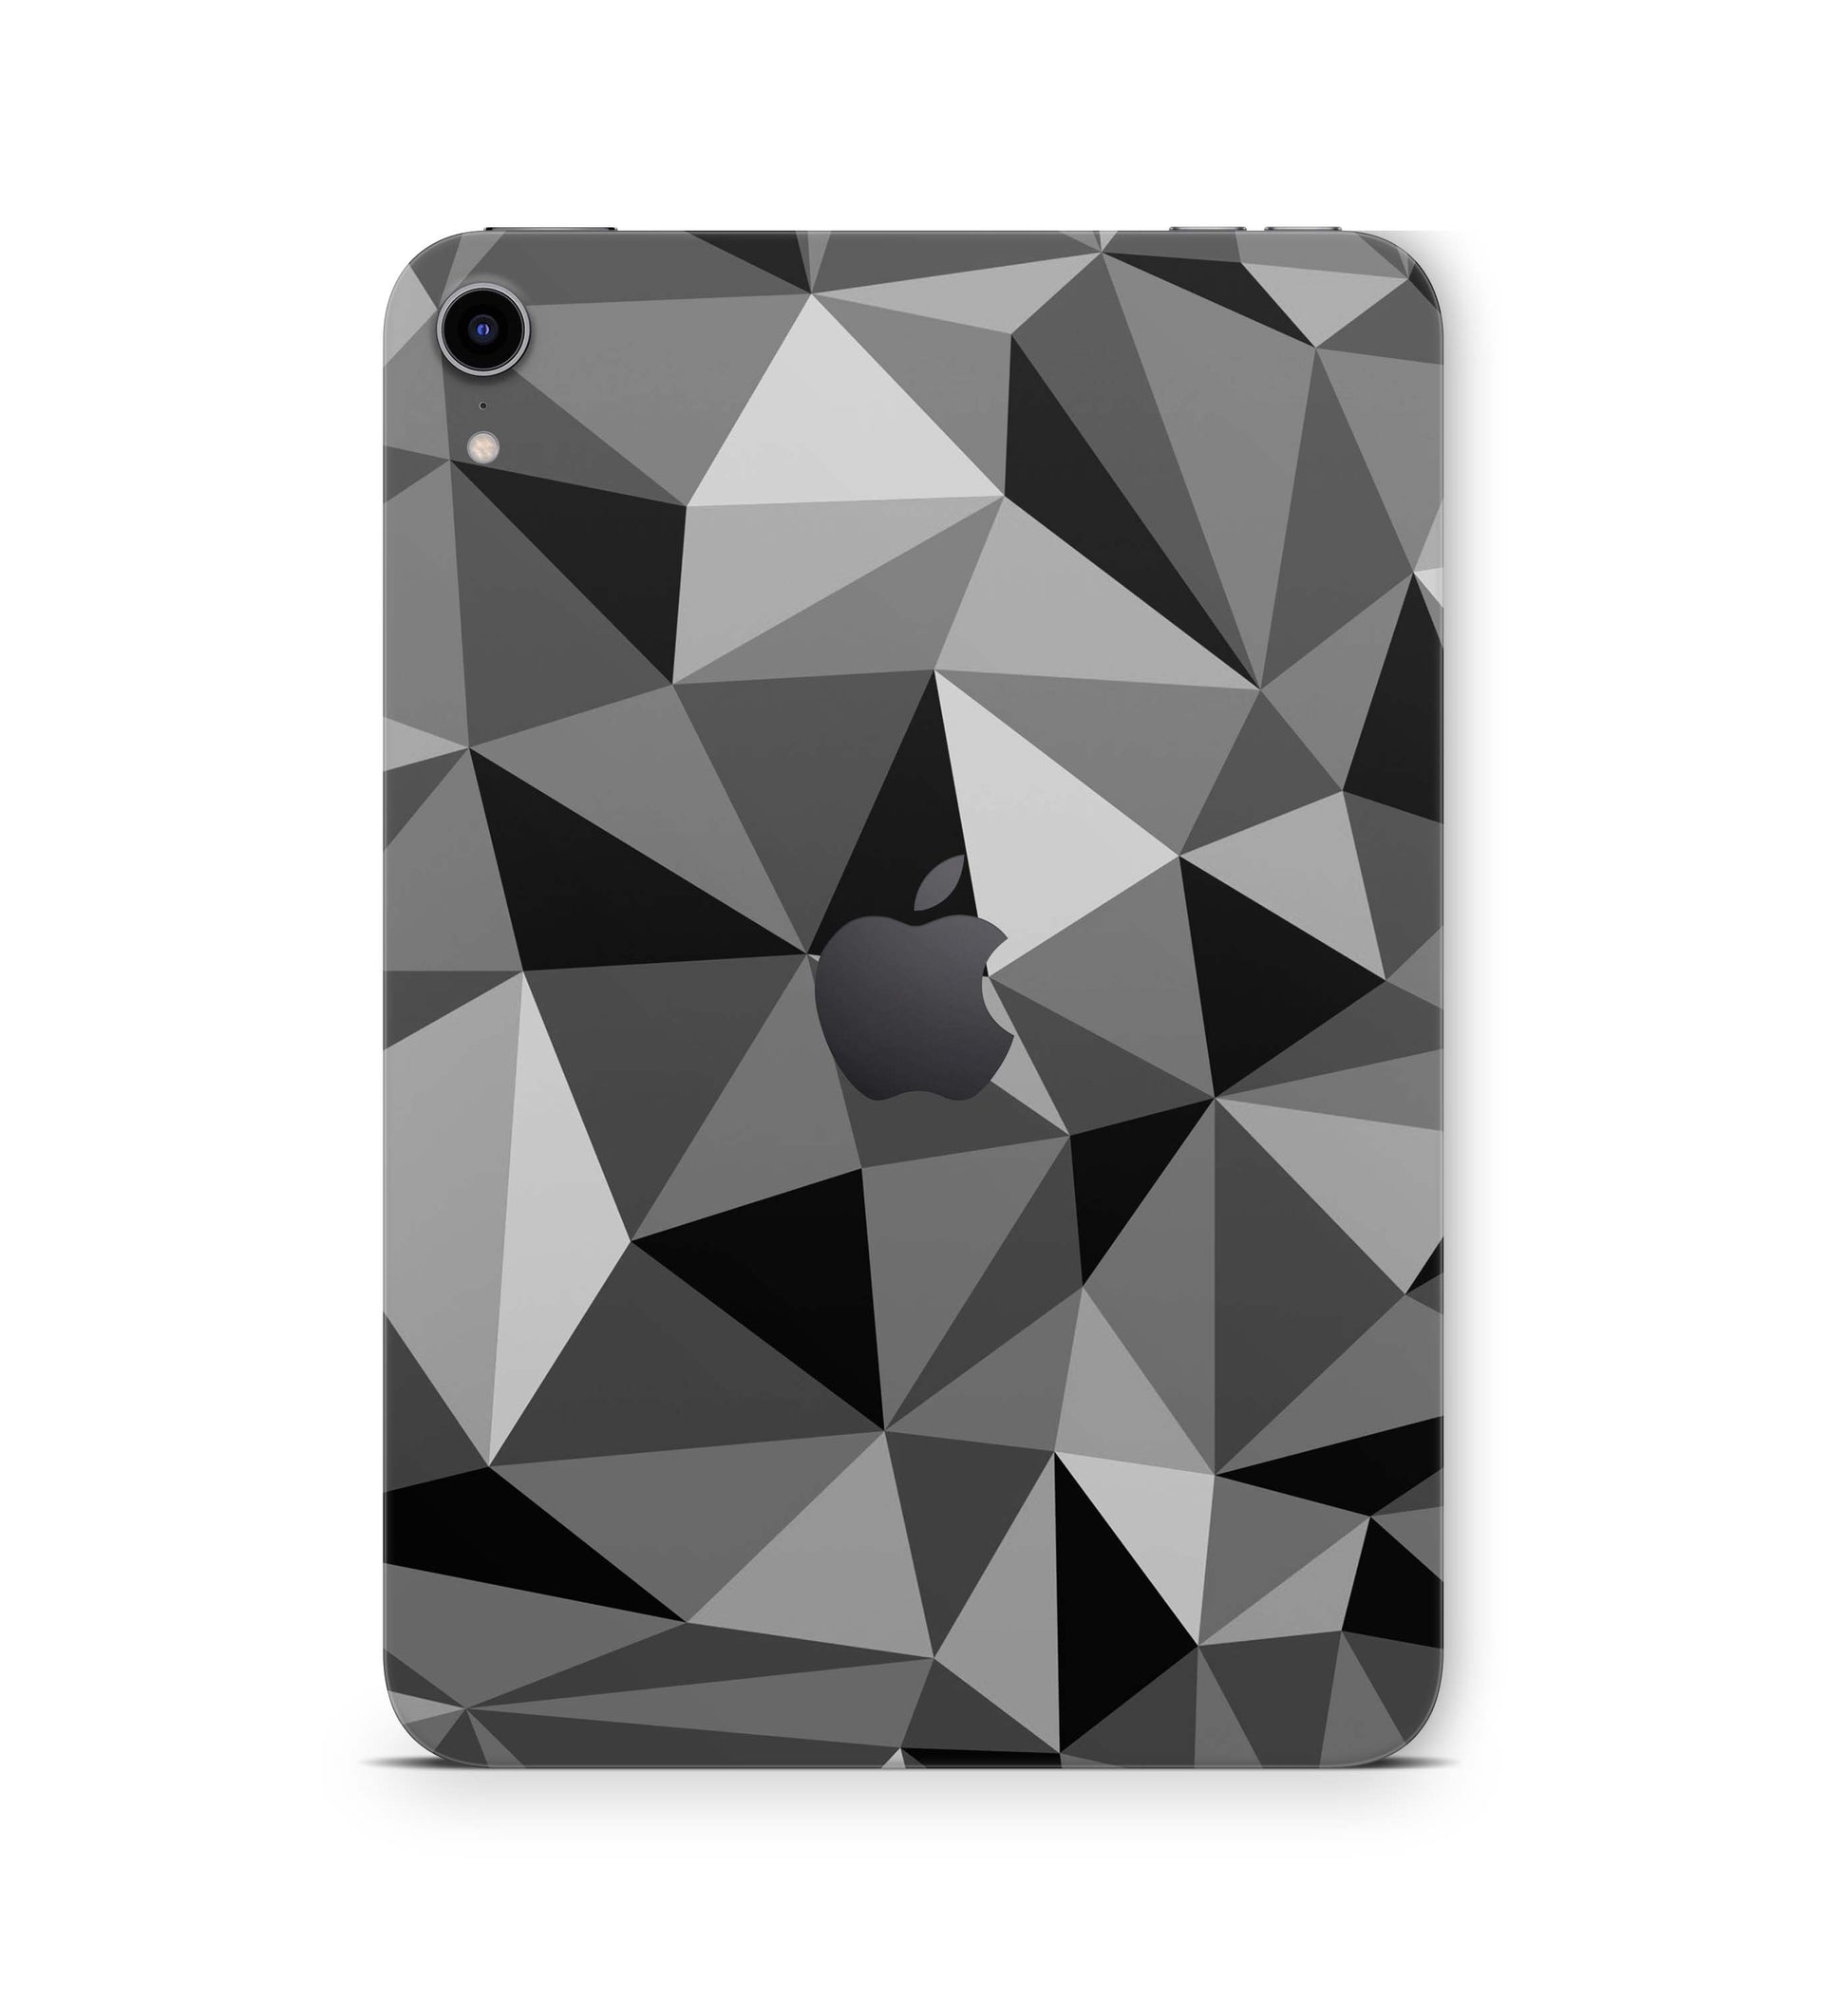 iPad Mini Skin Design Cover Folie Vinyl Skins & Wraps für alle iPad Mini Modelle Aufkleber Skins4u Polygrey  